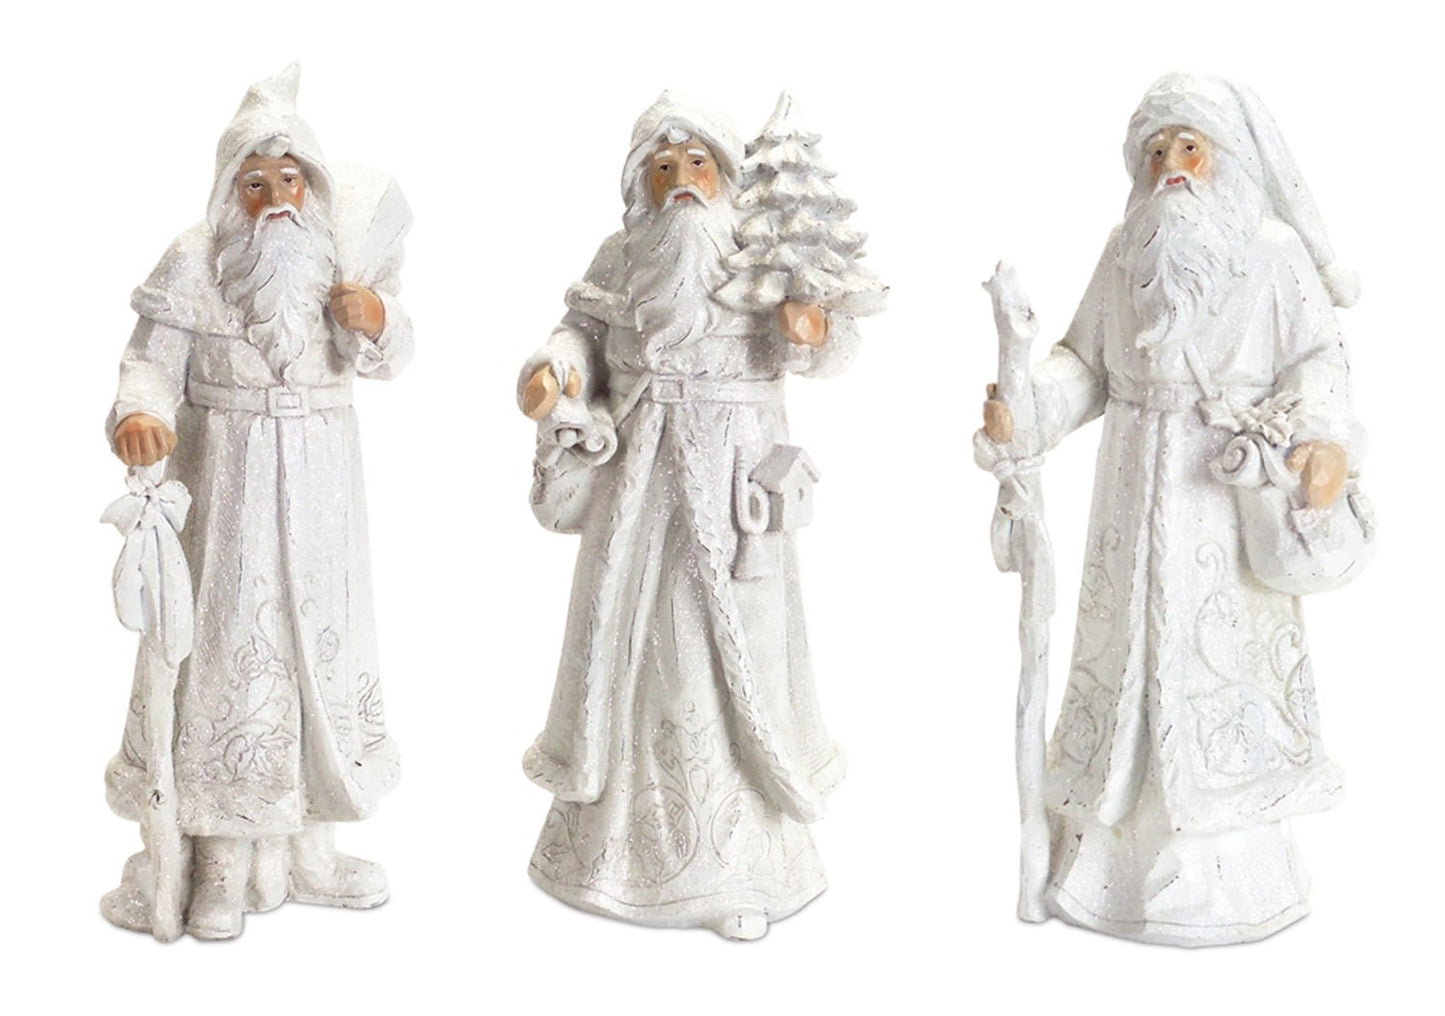 Snowy White Winter Santa Figurine (Set of 3)